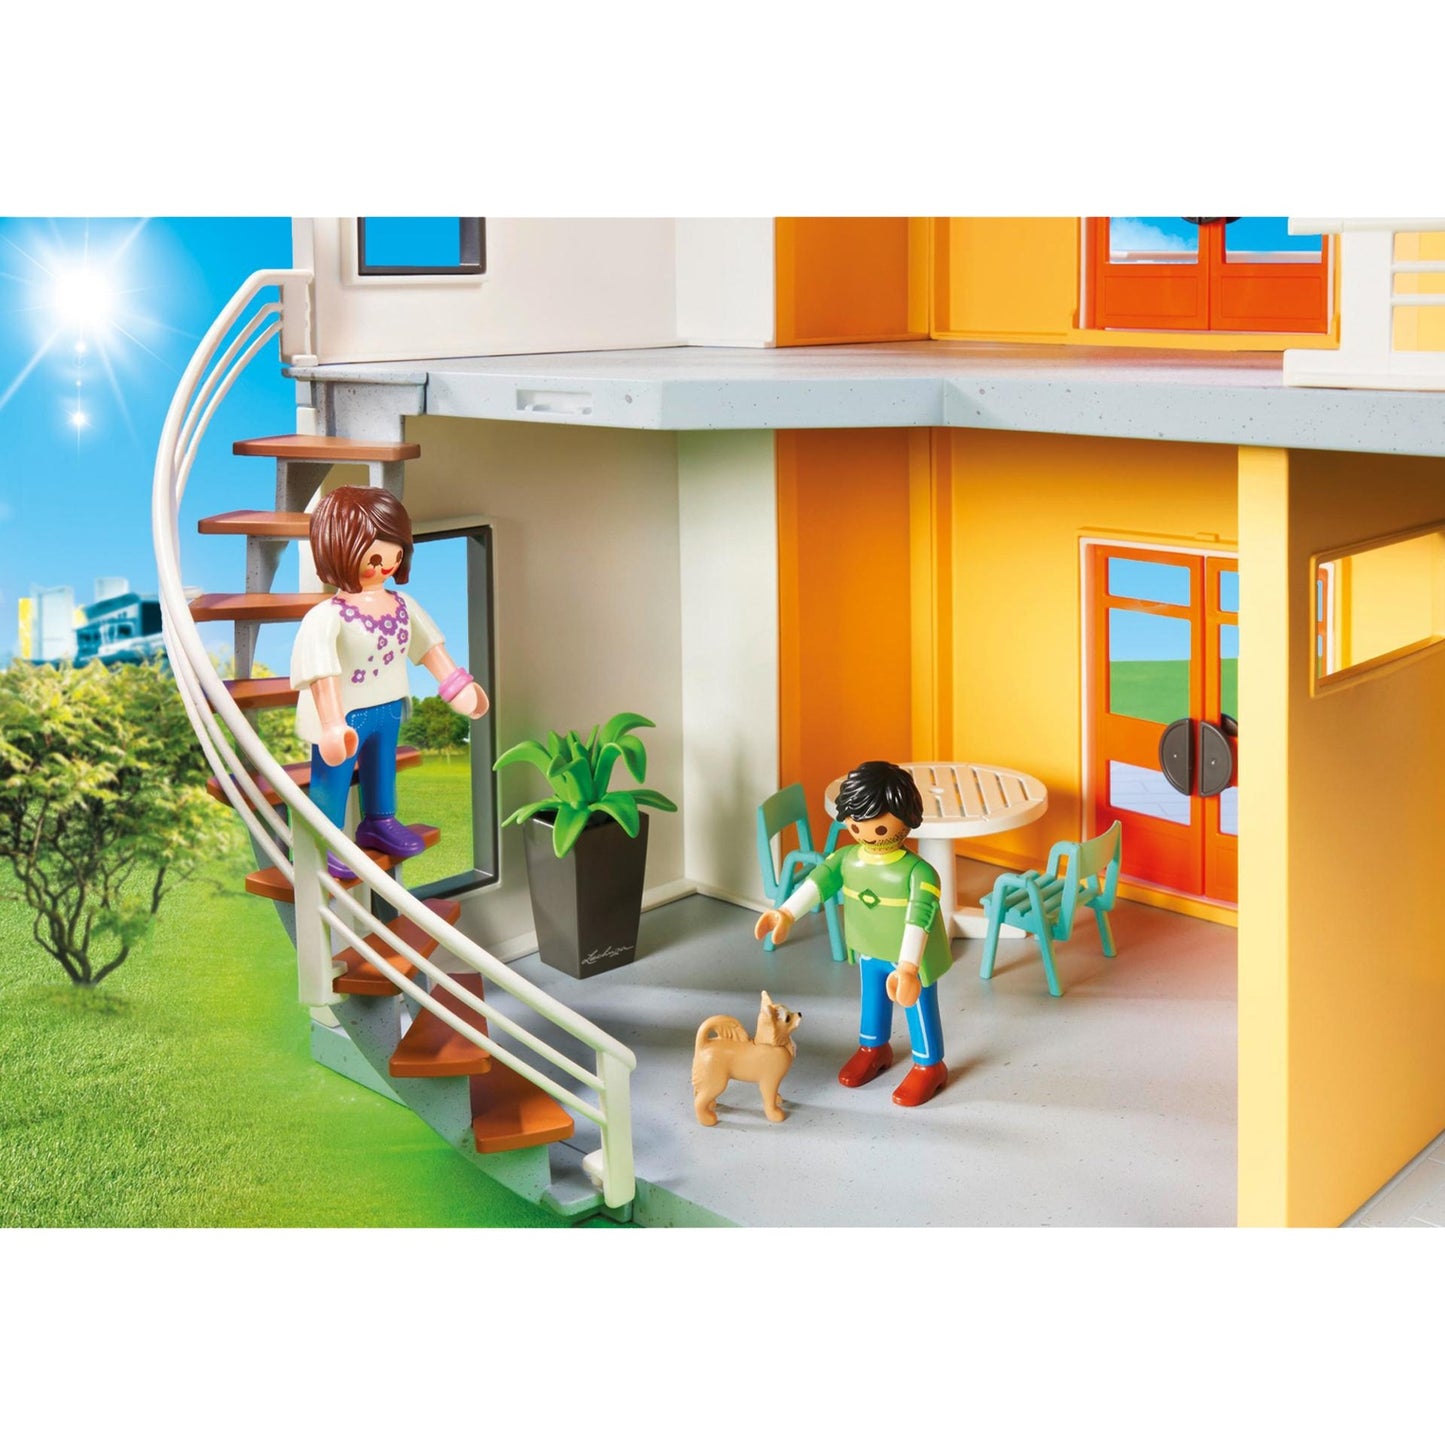 Playmobil City Life Modern House 9266